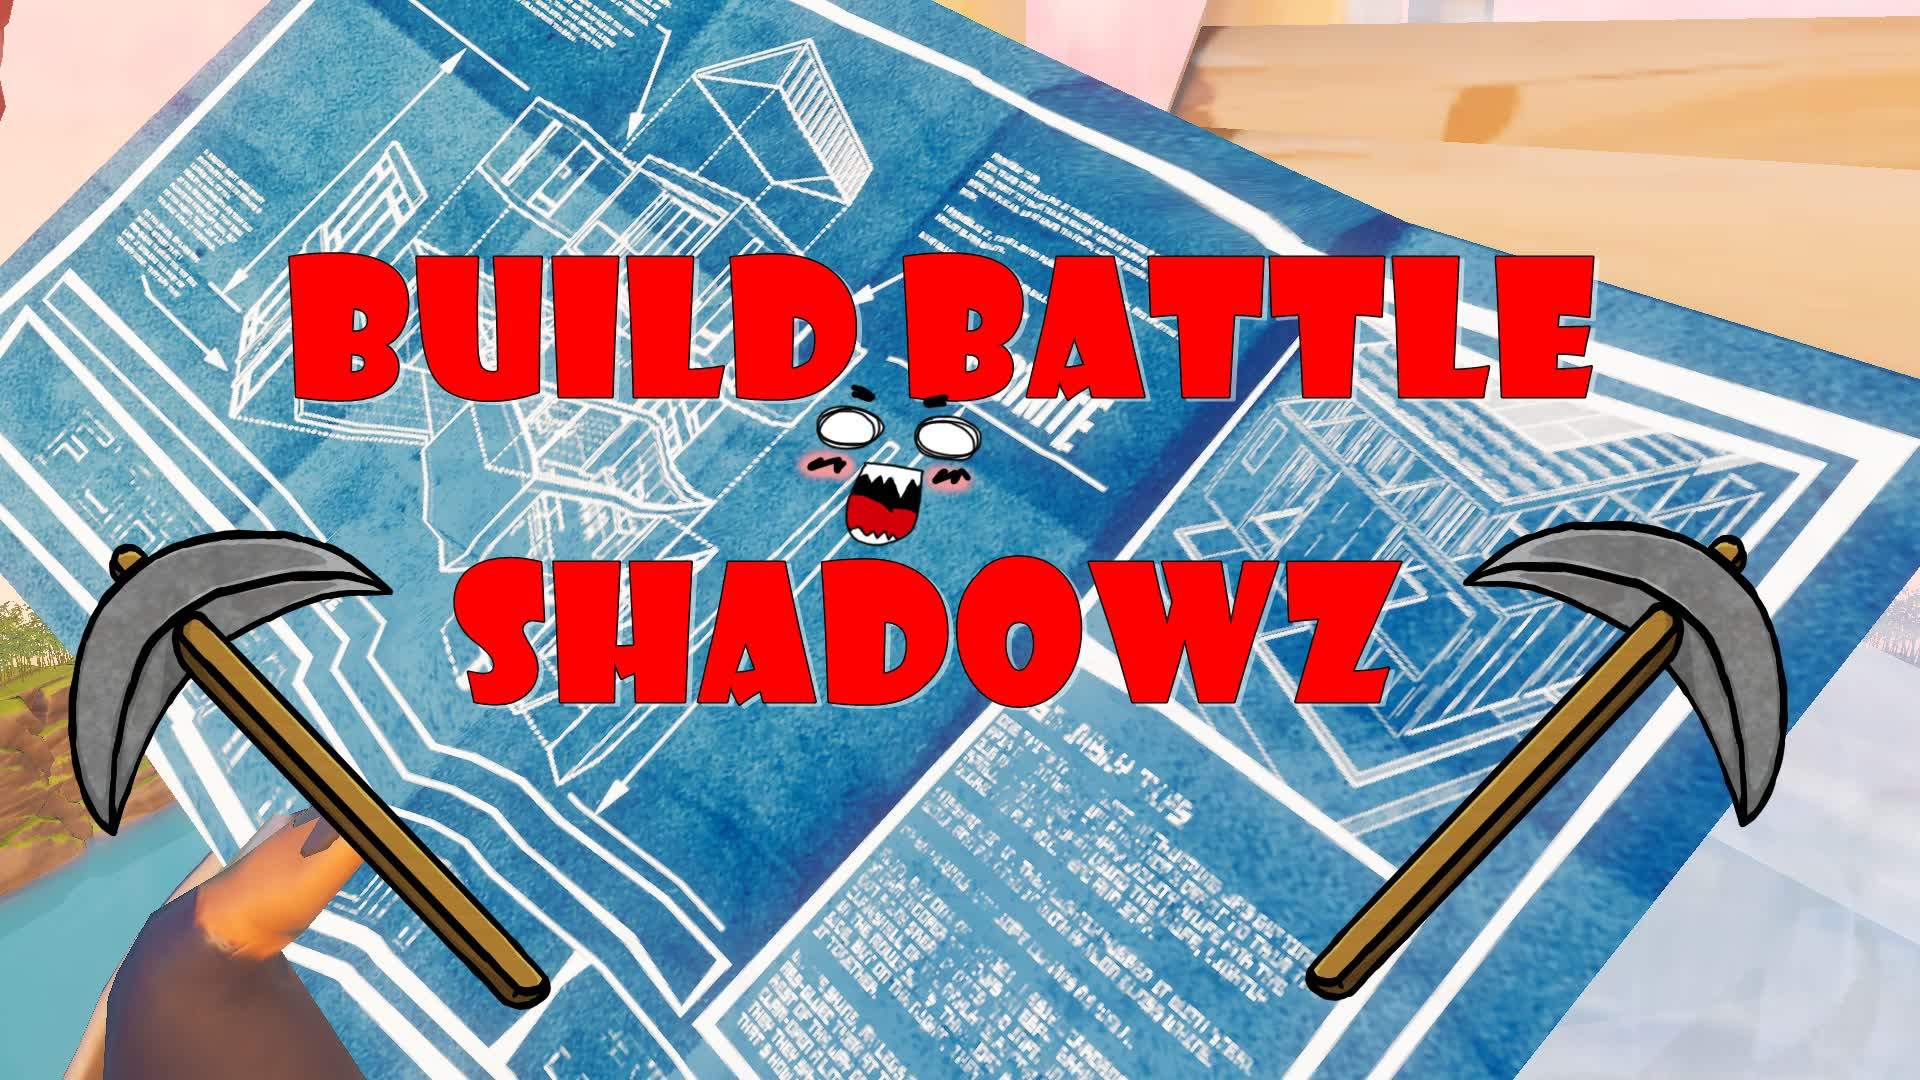 Build Battle 1v1 - Shadowz